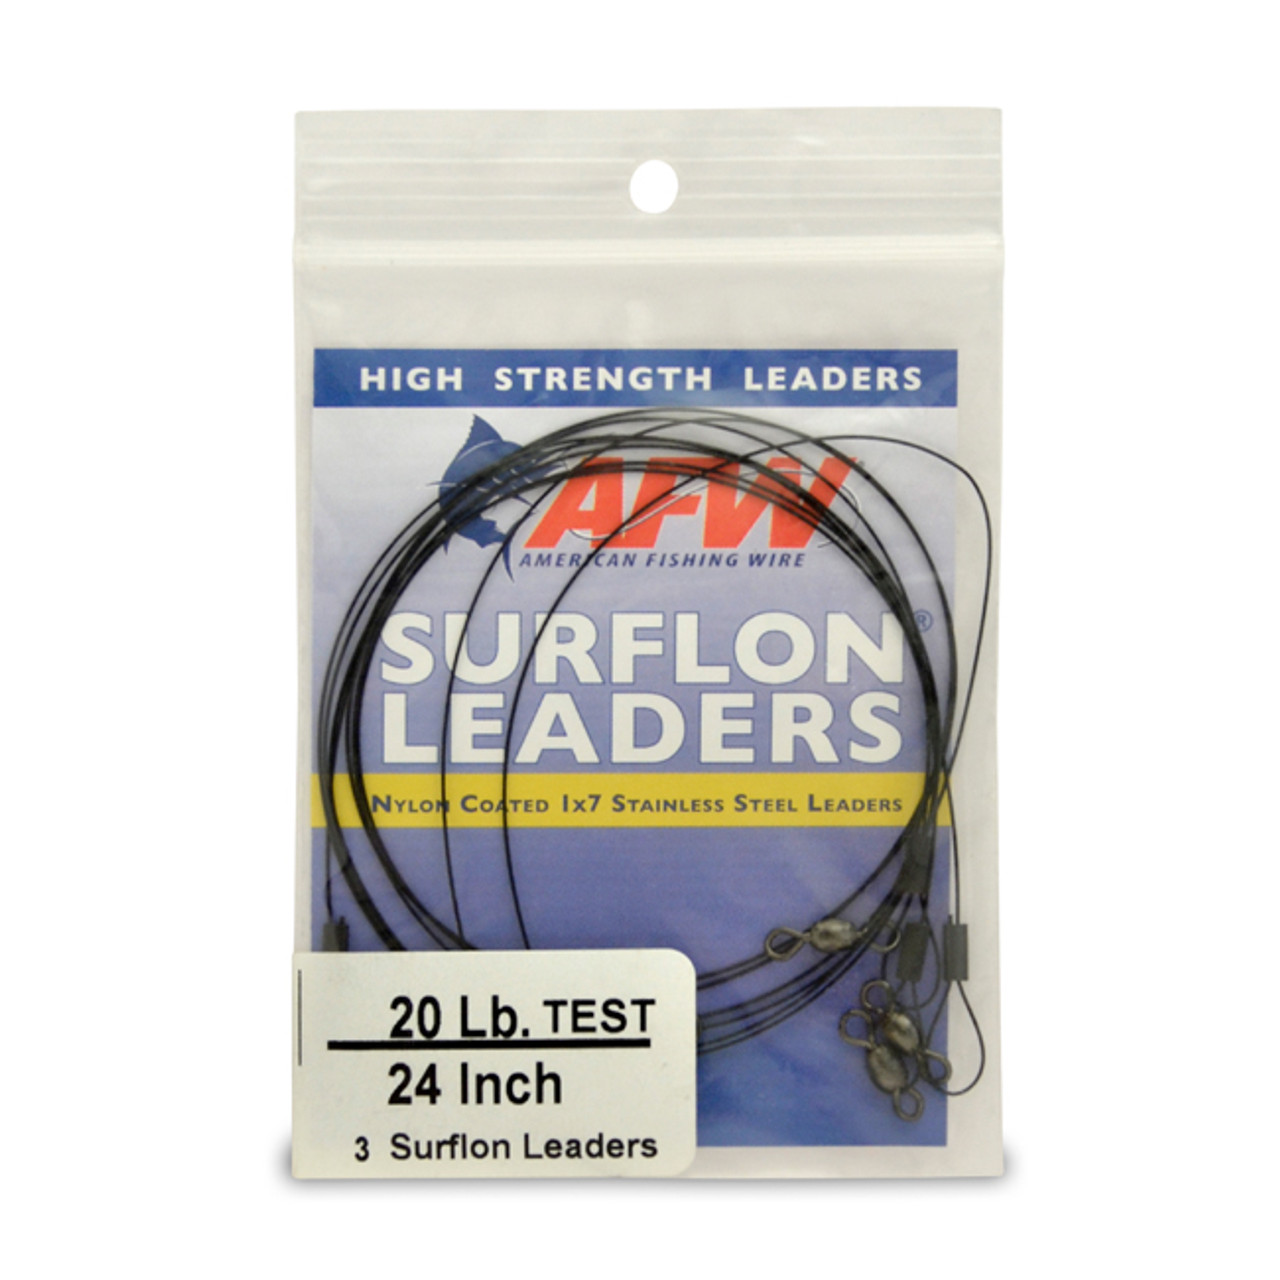 AFW - Surflon Leaders Nylon Coated 1x7 Stainless Steel Wire Leaders -  Sleeve - Swivel - LockSnap - Black - 24 Inch - 3 pc 